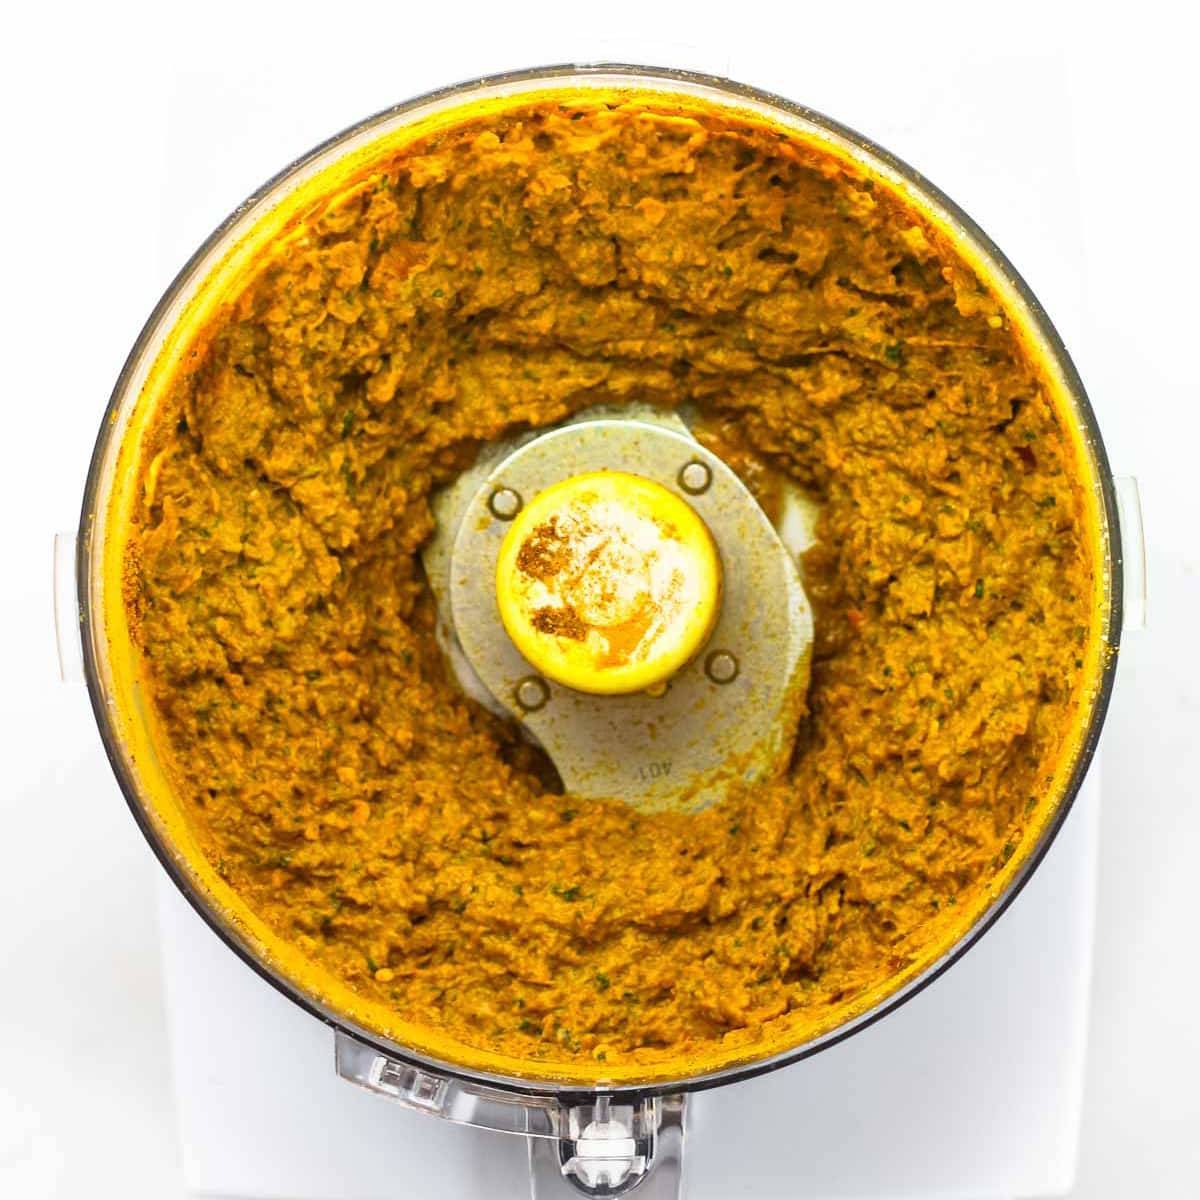 thai red curry paste substitute